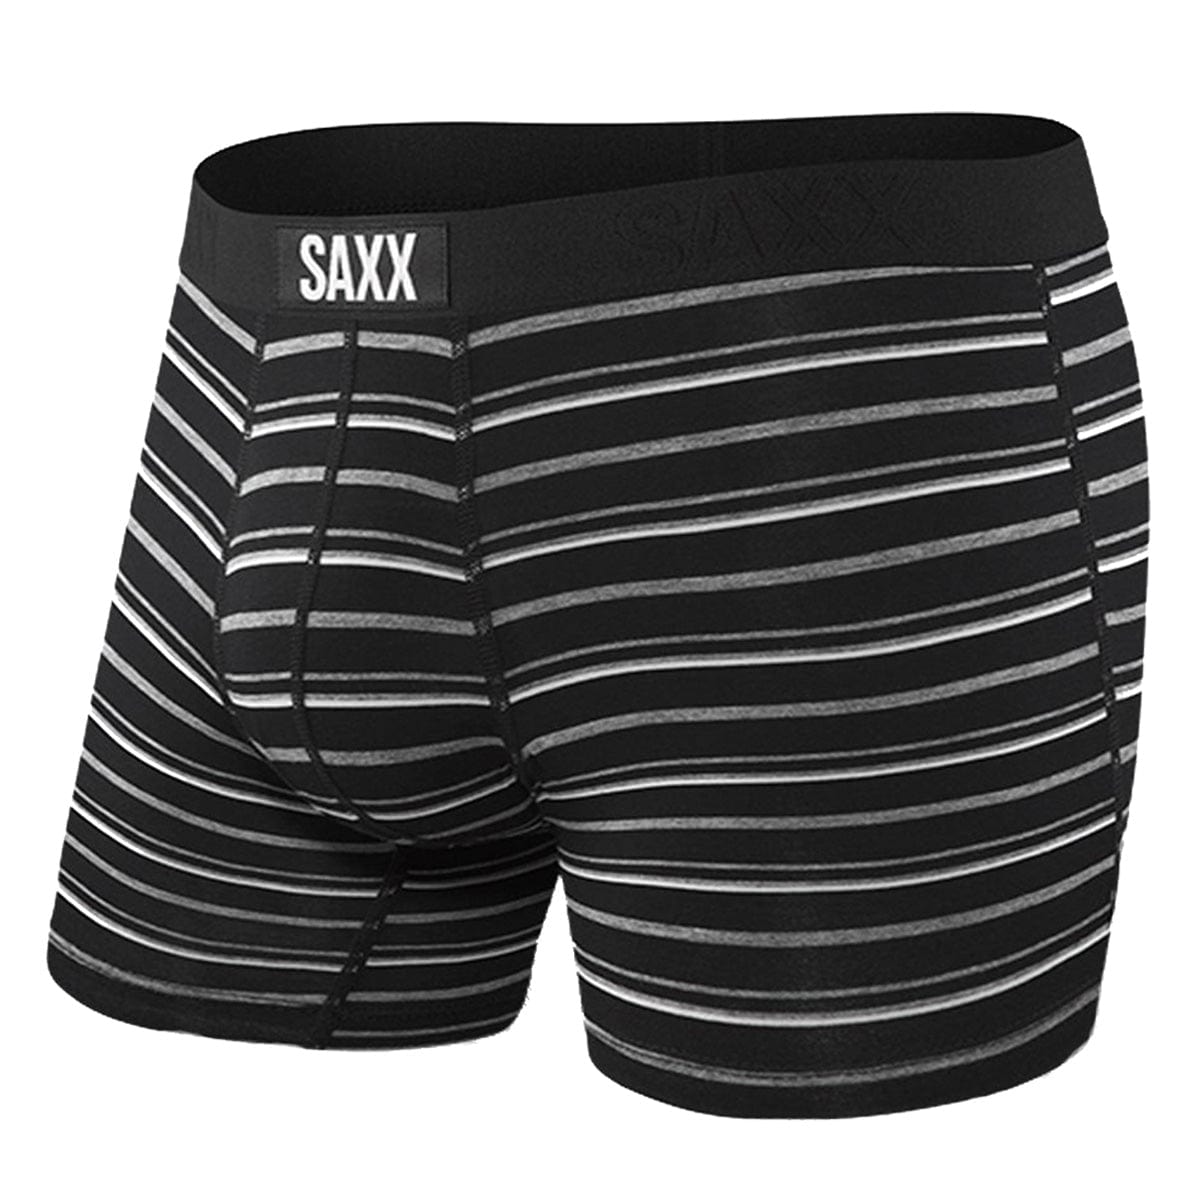 Saxx Vibe Boxers - Black Coast Stripe - The Hockey Shop Source For Sports